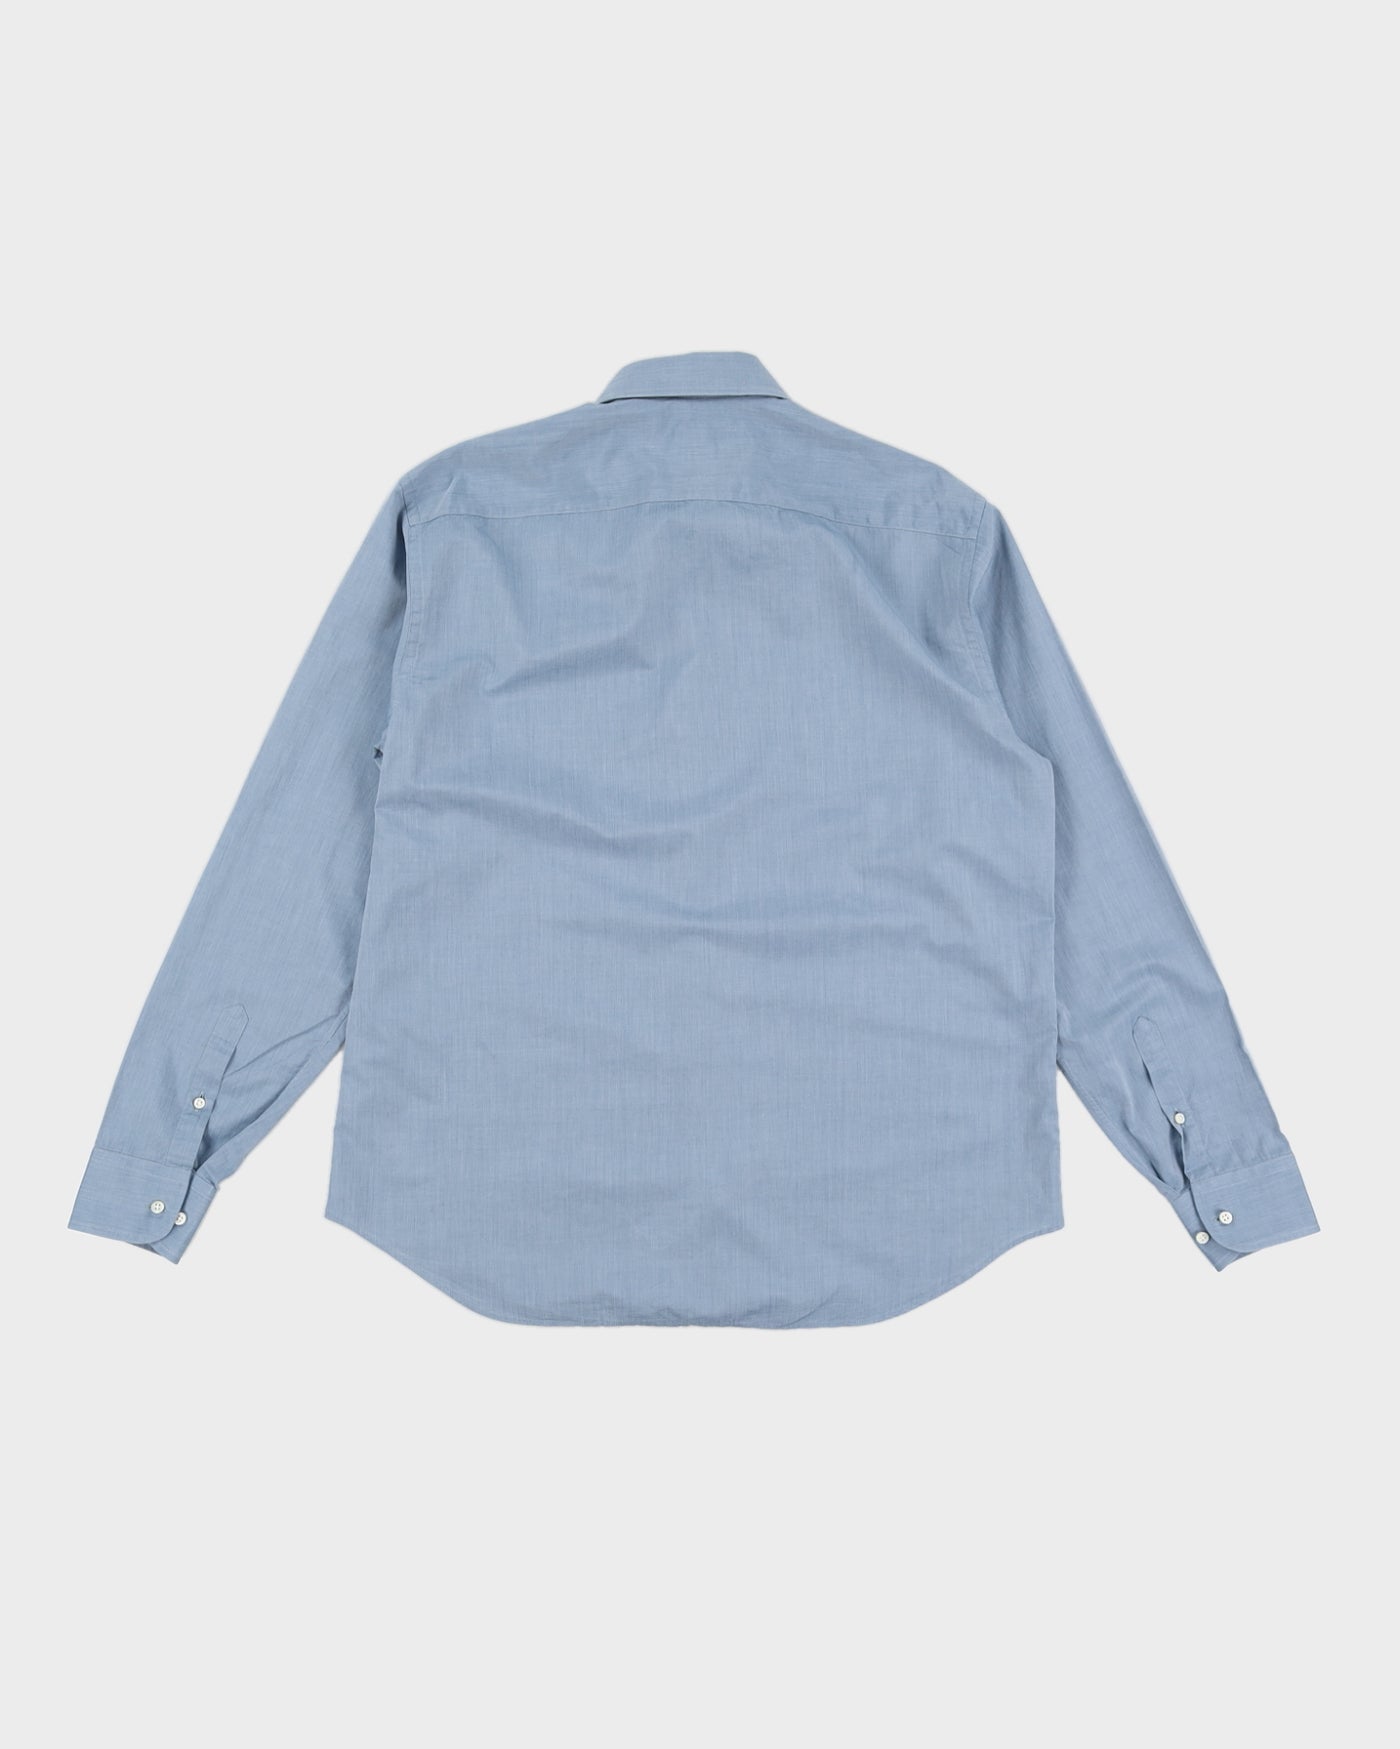 Armani Collezioni Blue Dress Shirt - L